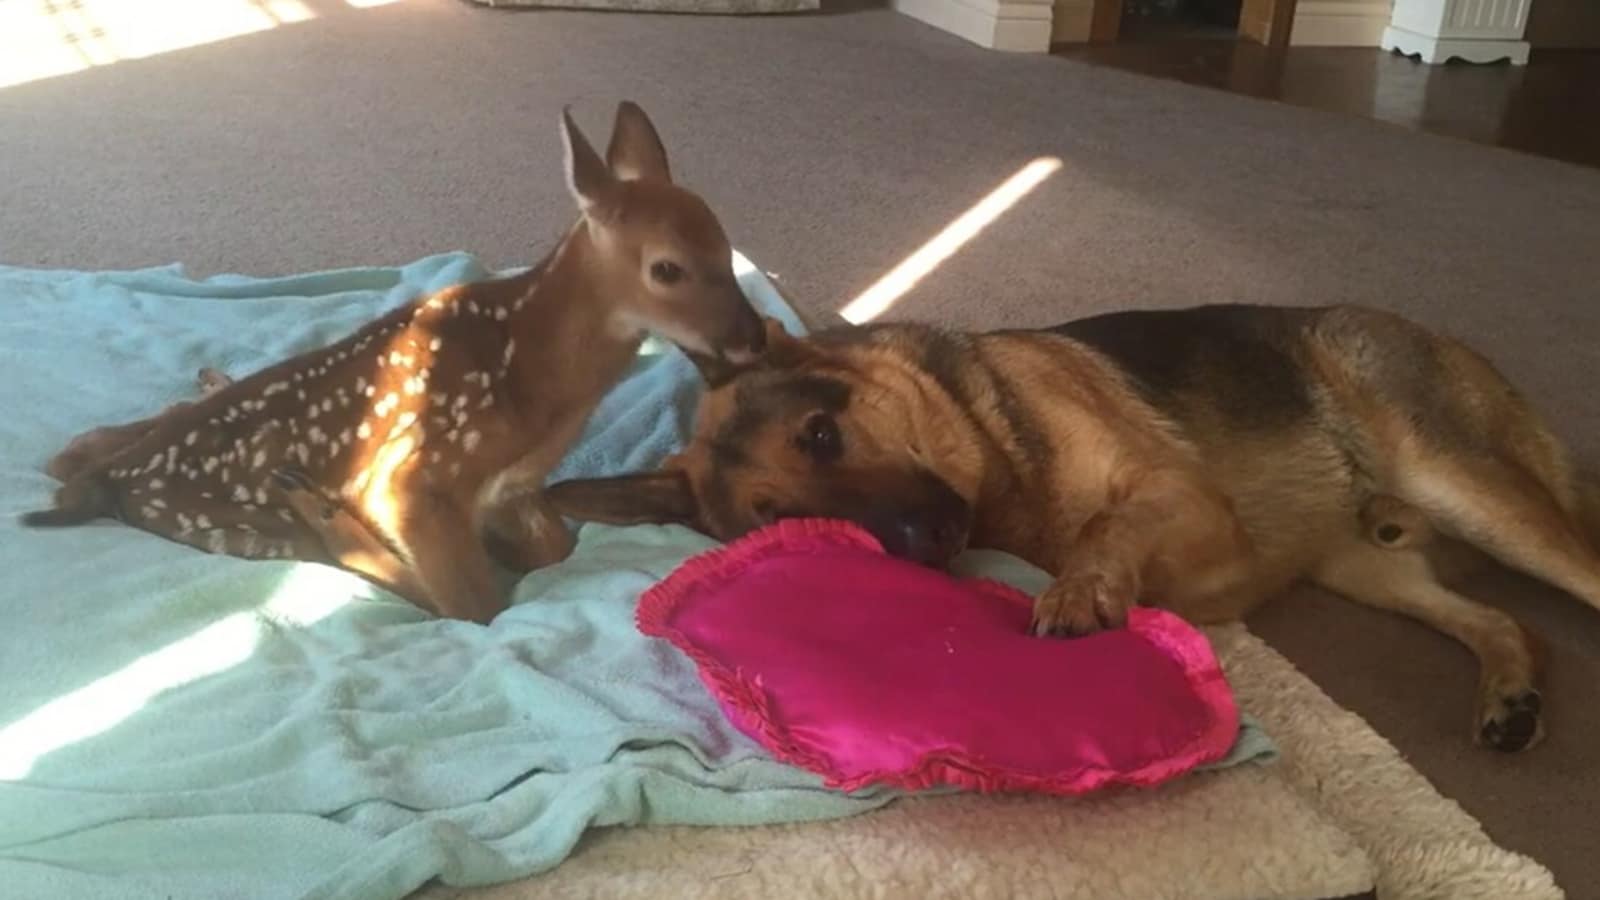 Doggo sweetly comforts injured baby deer. Watch cute animal video |  Trending - Hindustan Times